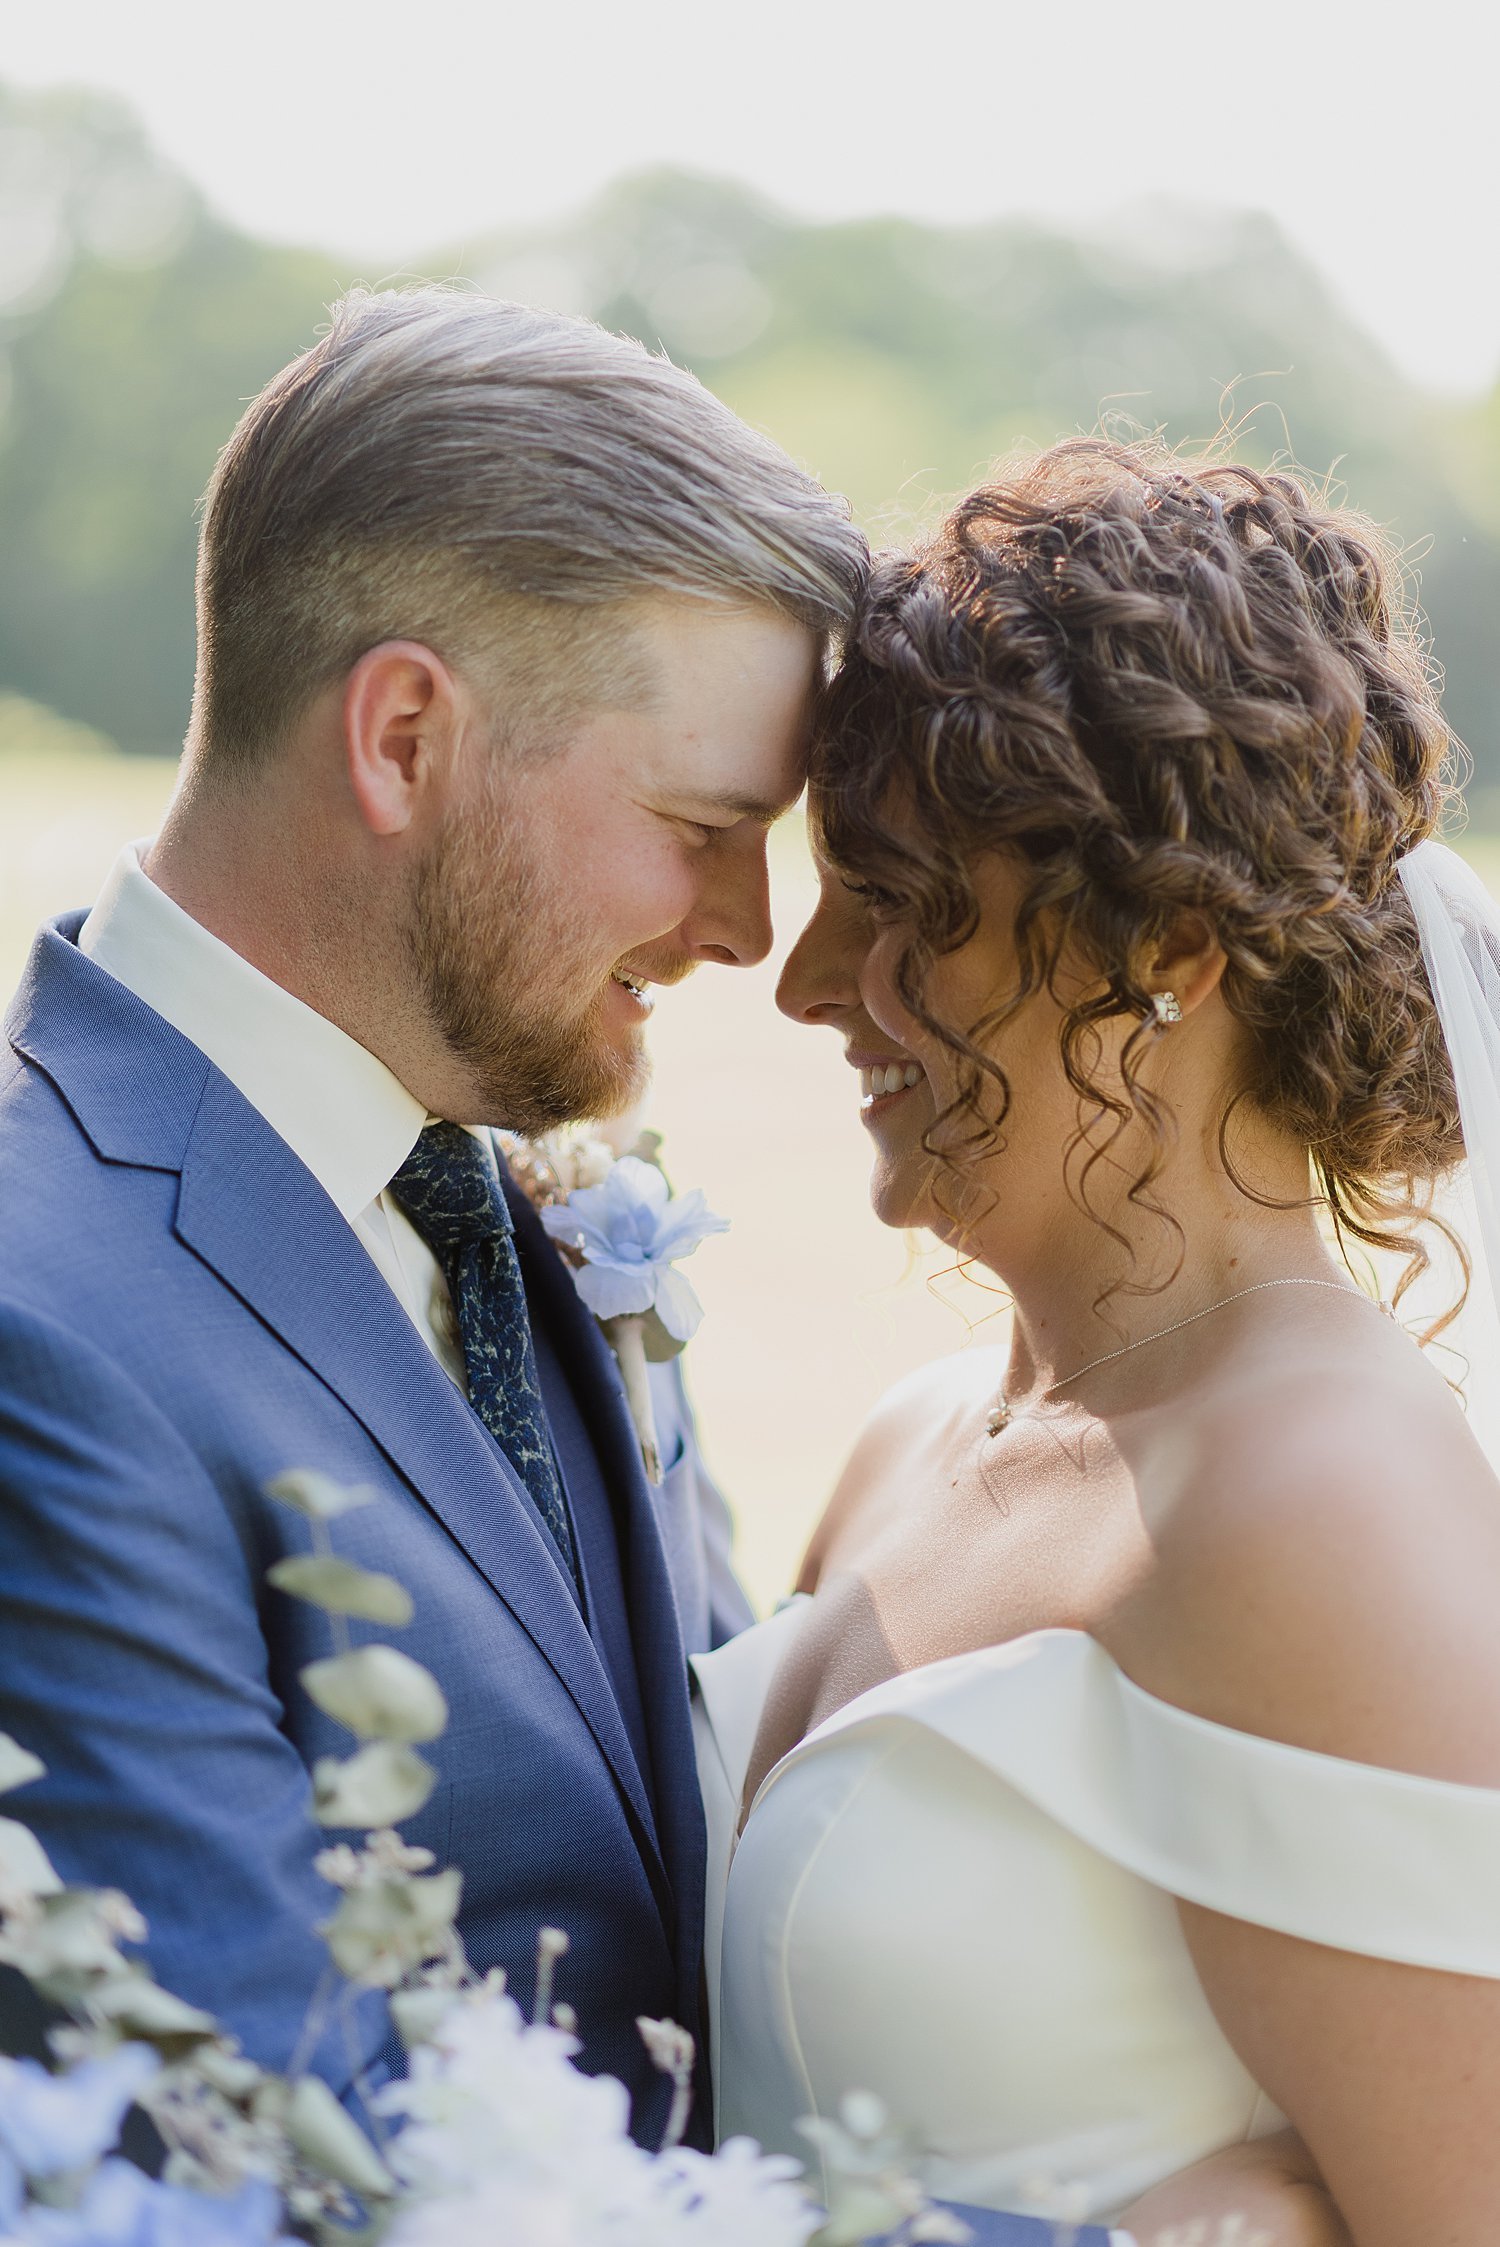 Elegant Summer Backyard Tented Wedding in Sydenham, Ontario | Prince Edward County Wedding Photographer | Holly McMurter Photographs_0054.jpg